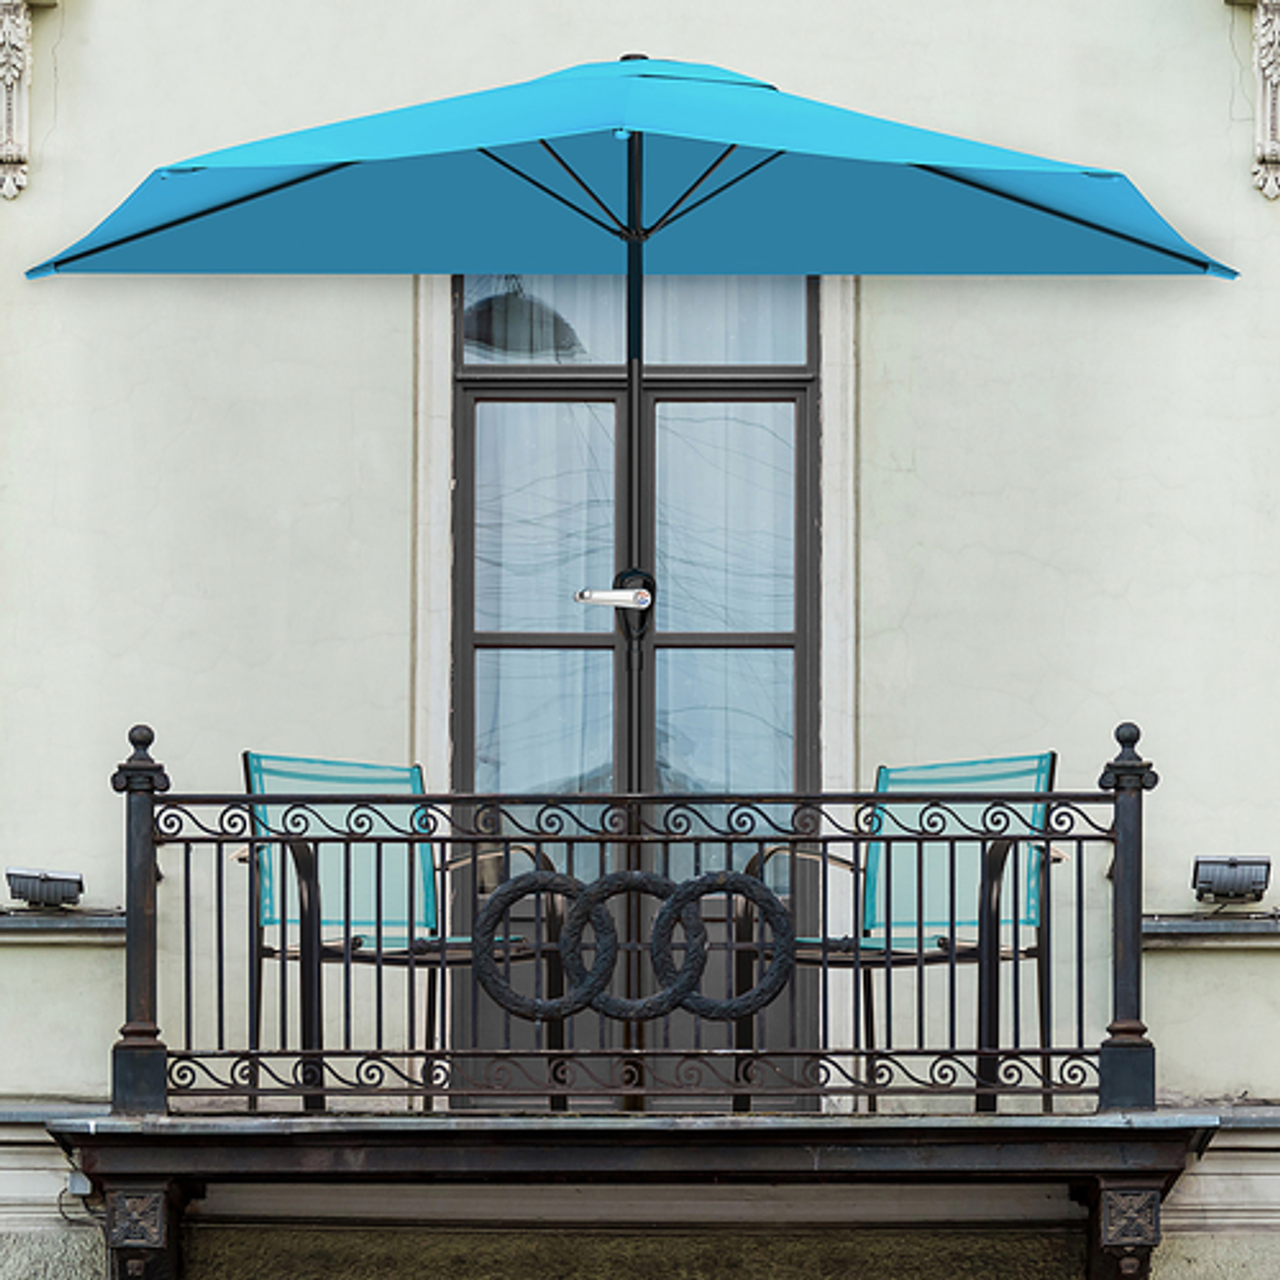 Nature Spring - 9' Half Round Patio Umbrella with Easy Crank- Small Space Outdoor Shade Umbrella for Balcony, Porch, Deck, Awning - Brilliant Blue